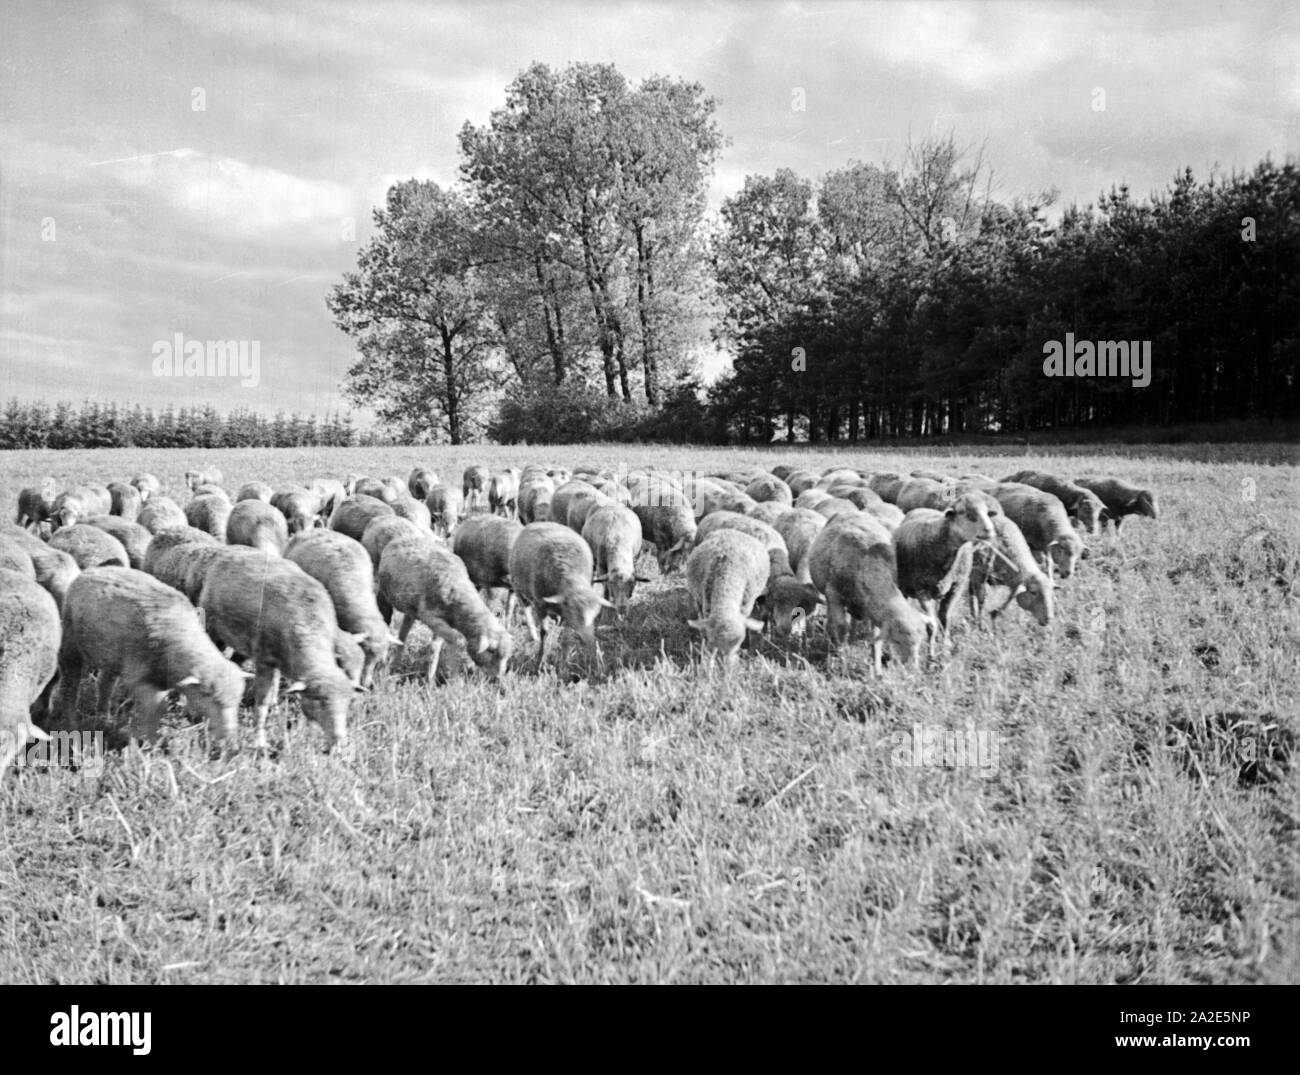 Eine hungrige Schafherde wird über ein Stoppelfeld geschickt, Ostpreußen, 1930er Jahre. A flock of hungry sheep is sent t a stubble field, East Prussia, 1930s. Stock Photo